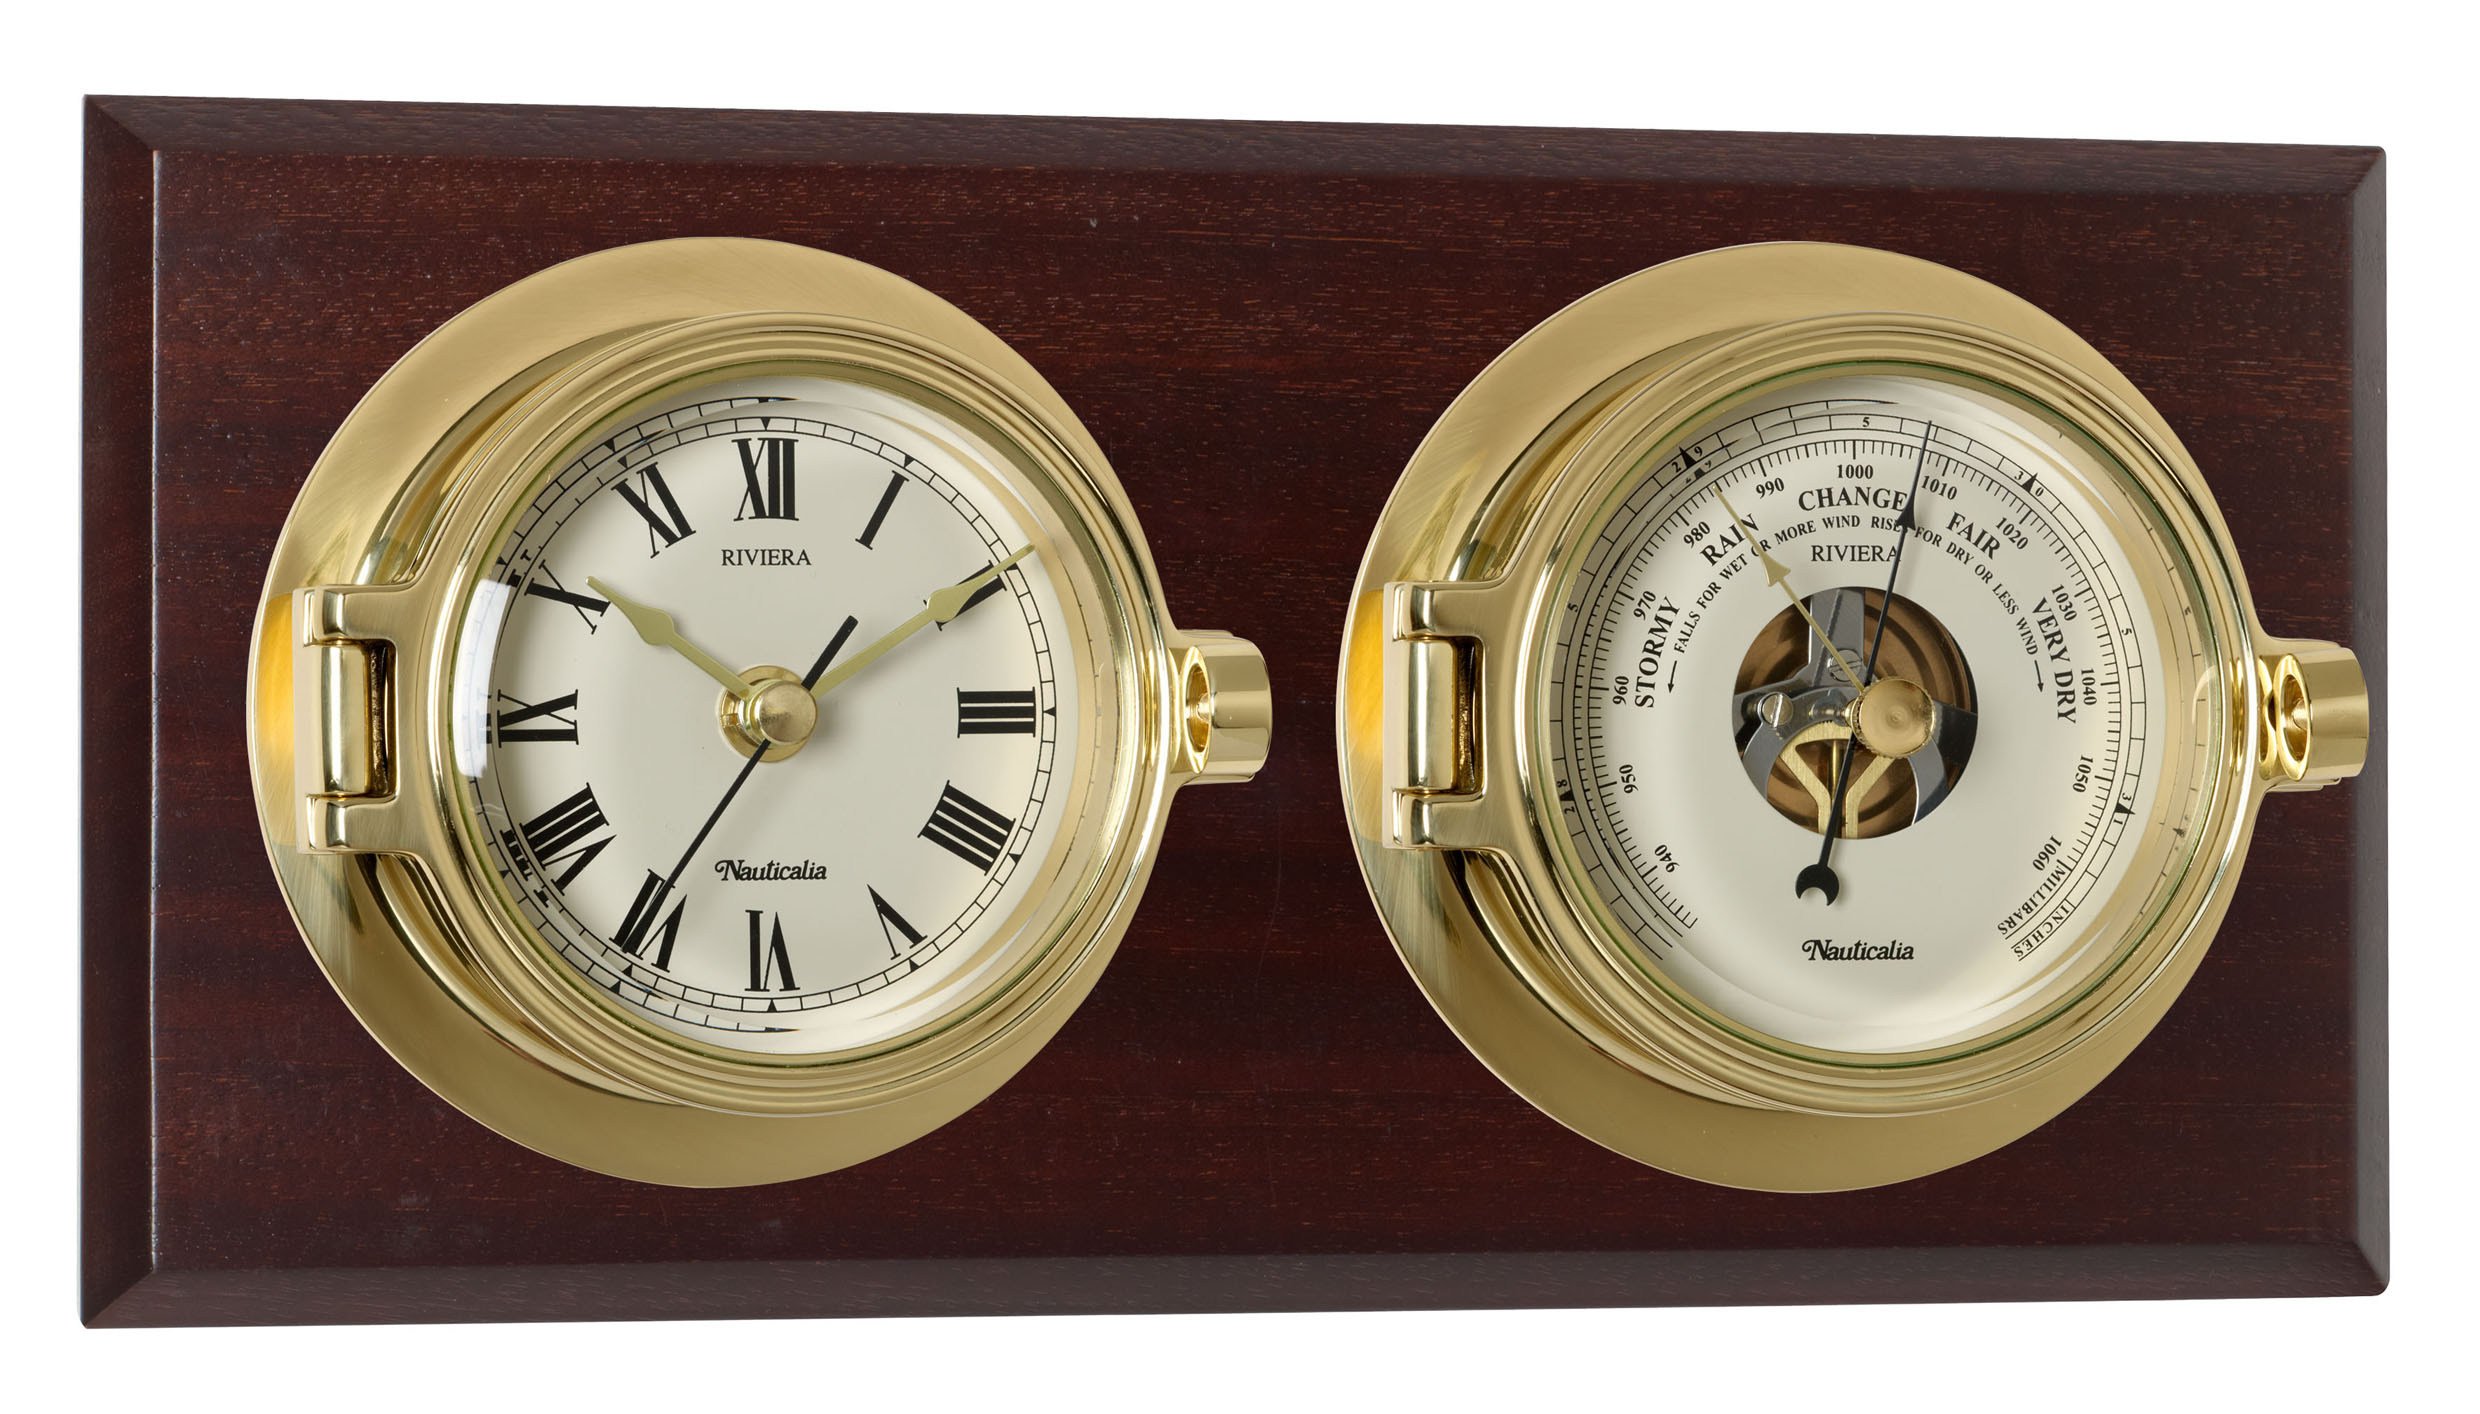 Mounted Riviera Clock And Barometer Set From Nauticalia The Marine